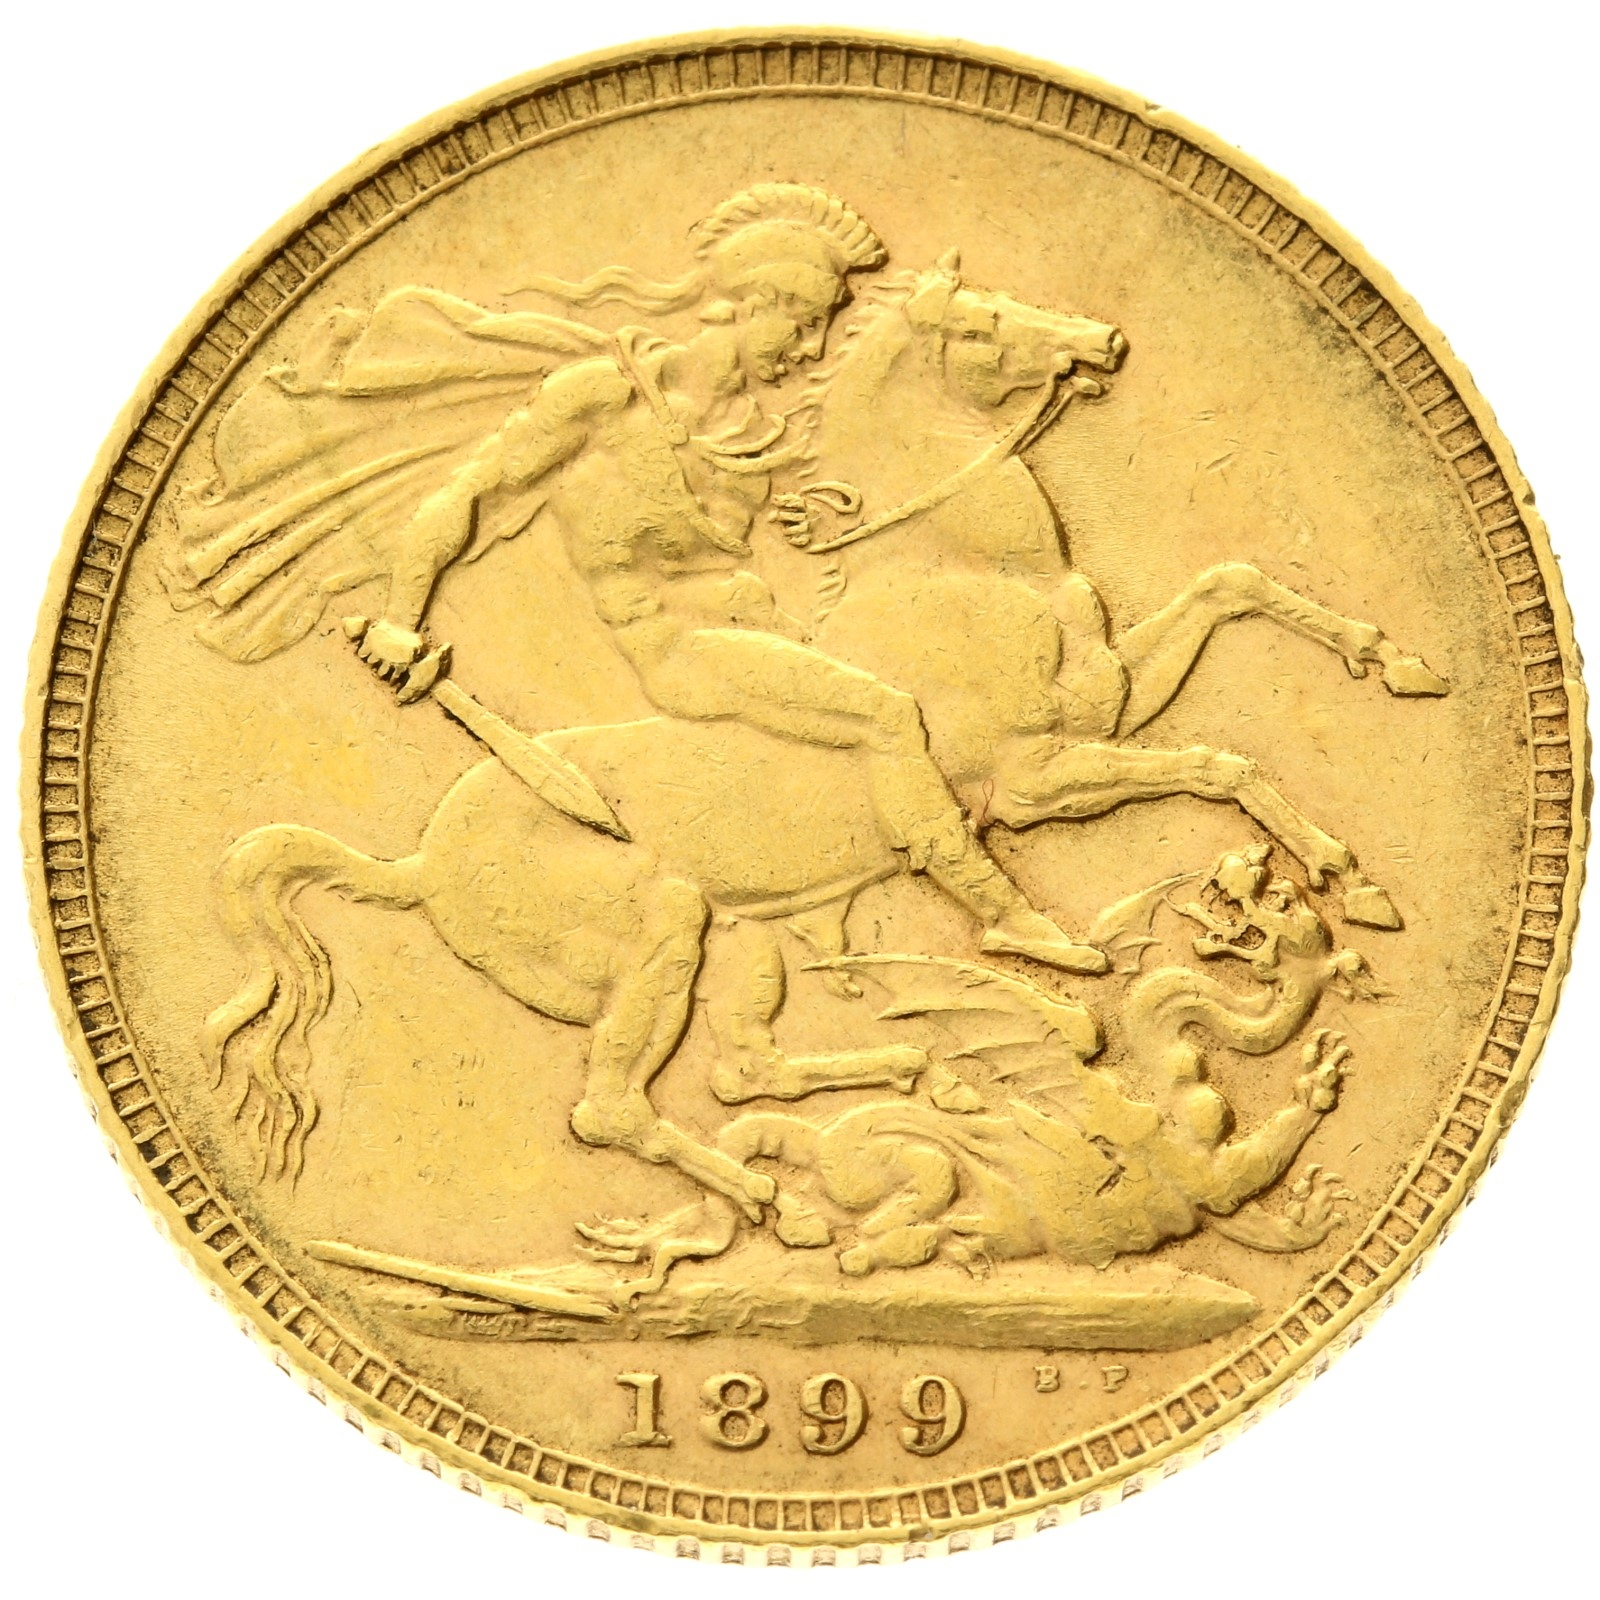 United Kingdom - 1 sovereign - 1899 - Victoria 